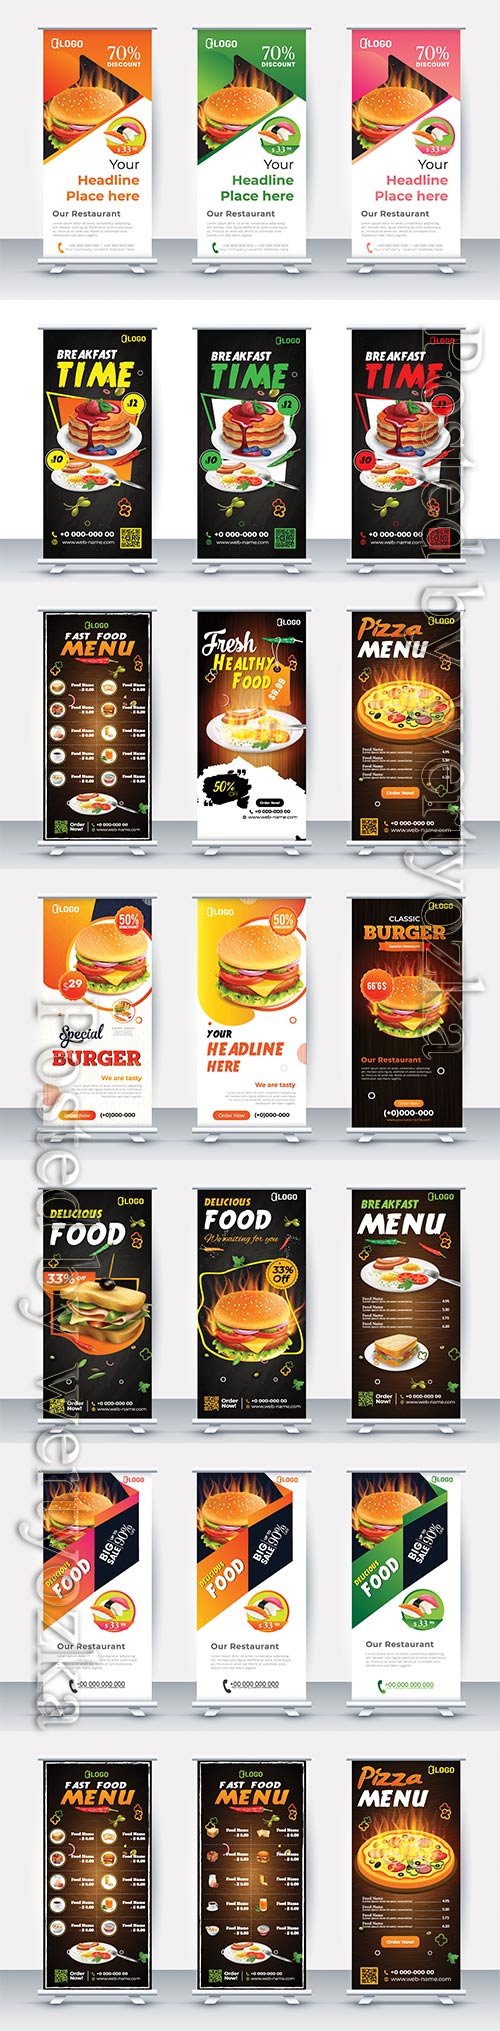 Fast food roll up banner restaurant menu template